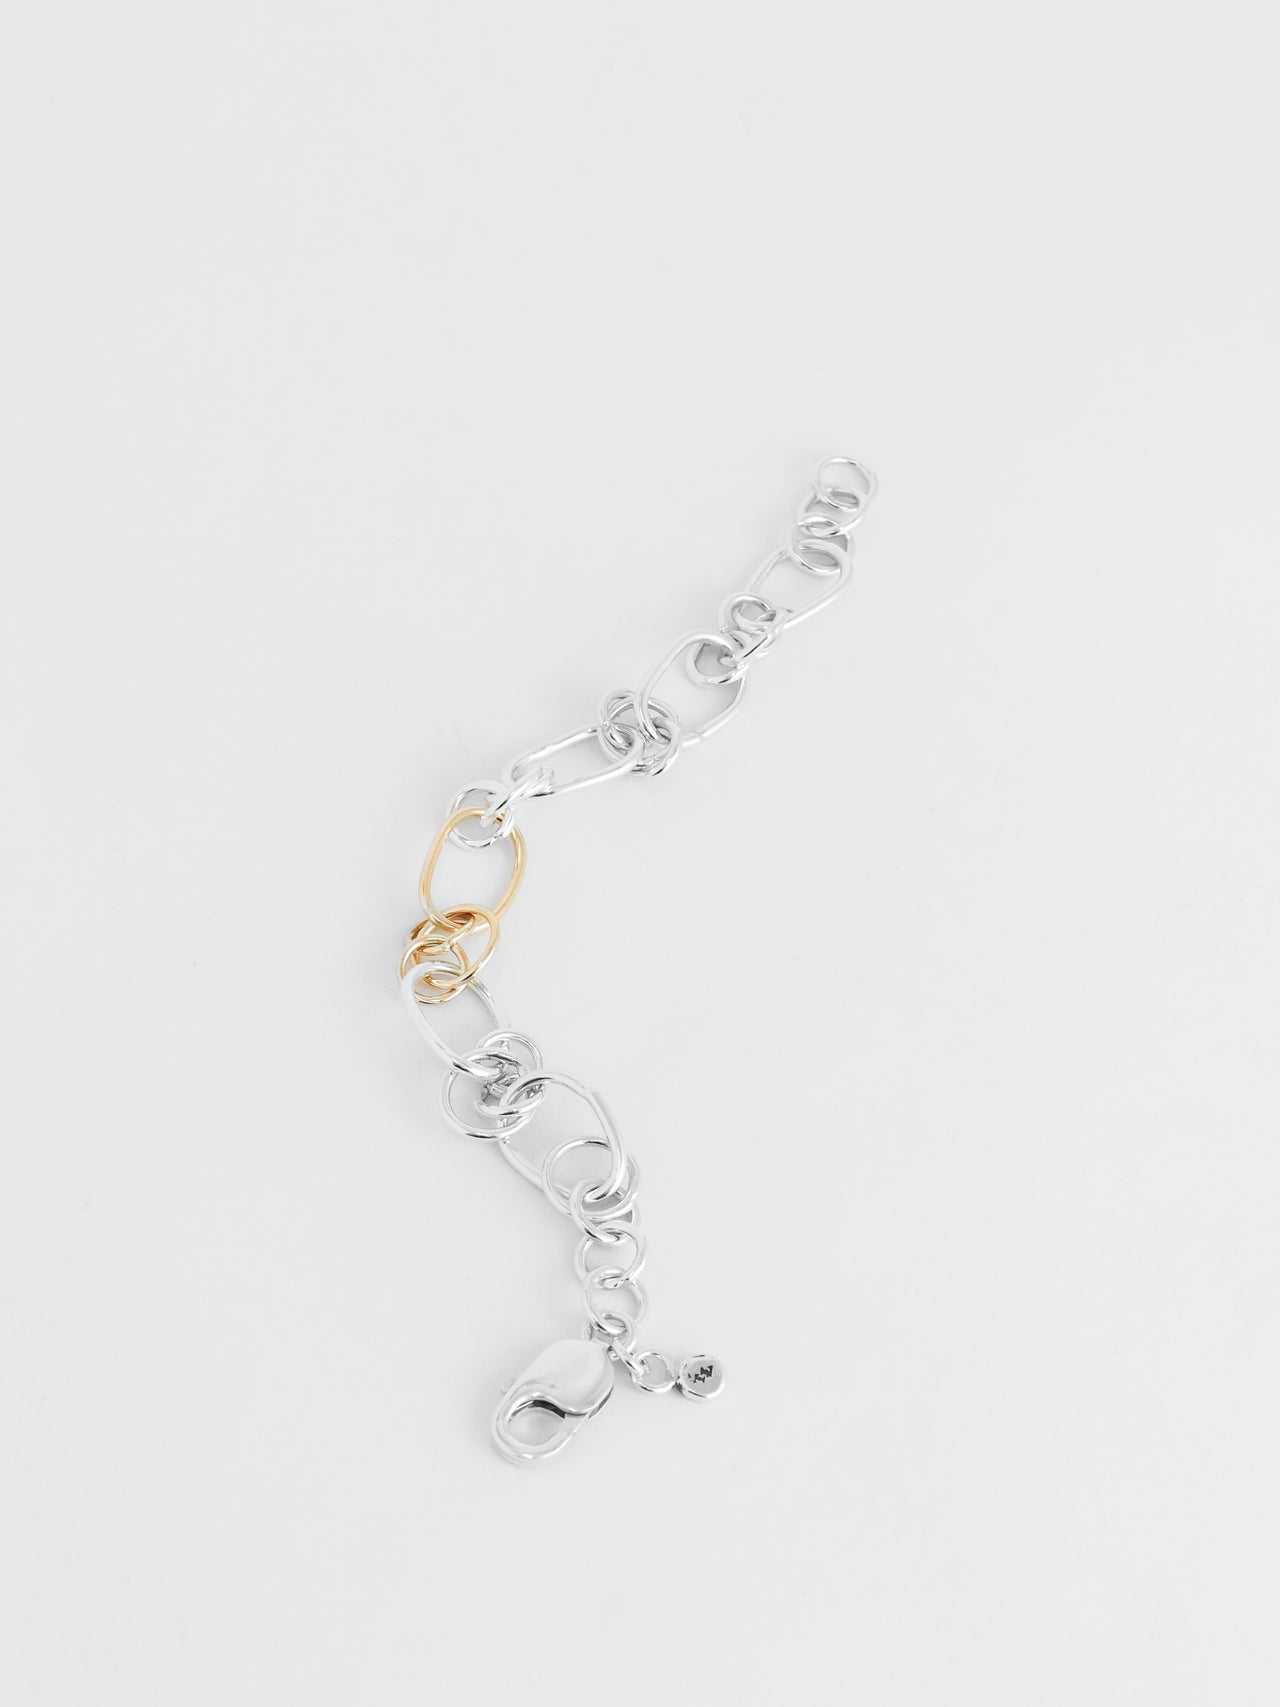 The-Lair-Jewellery-Okaasan-Bracelet-9ct-Yellow-Gold